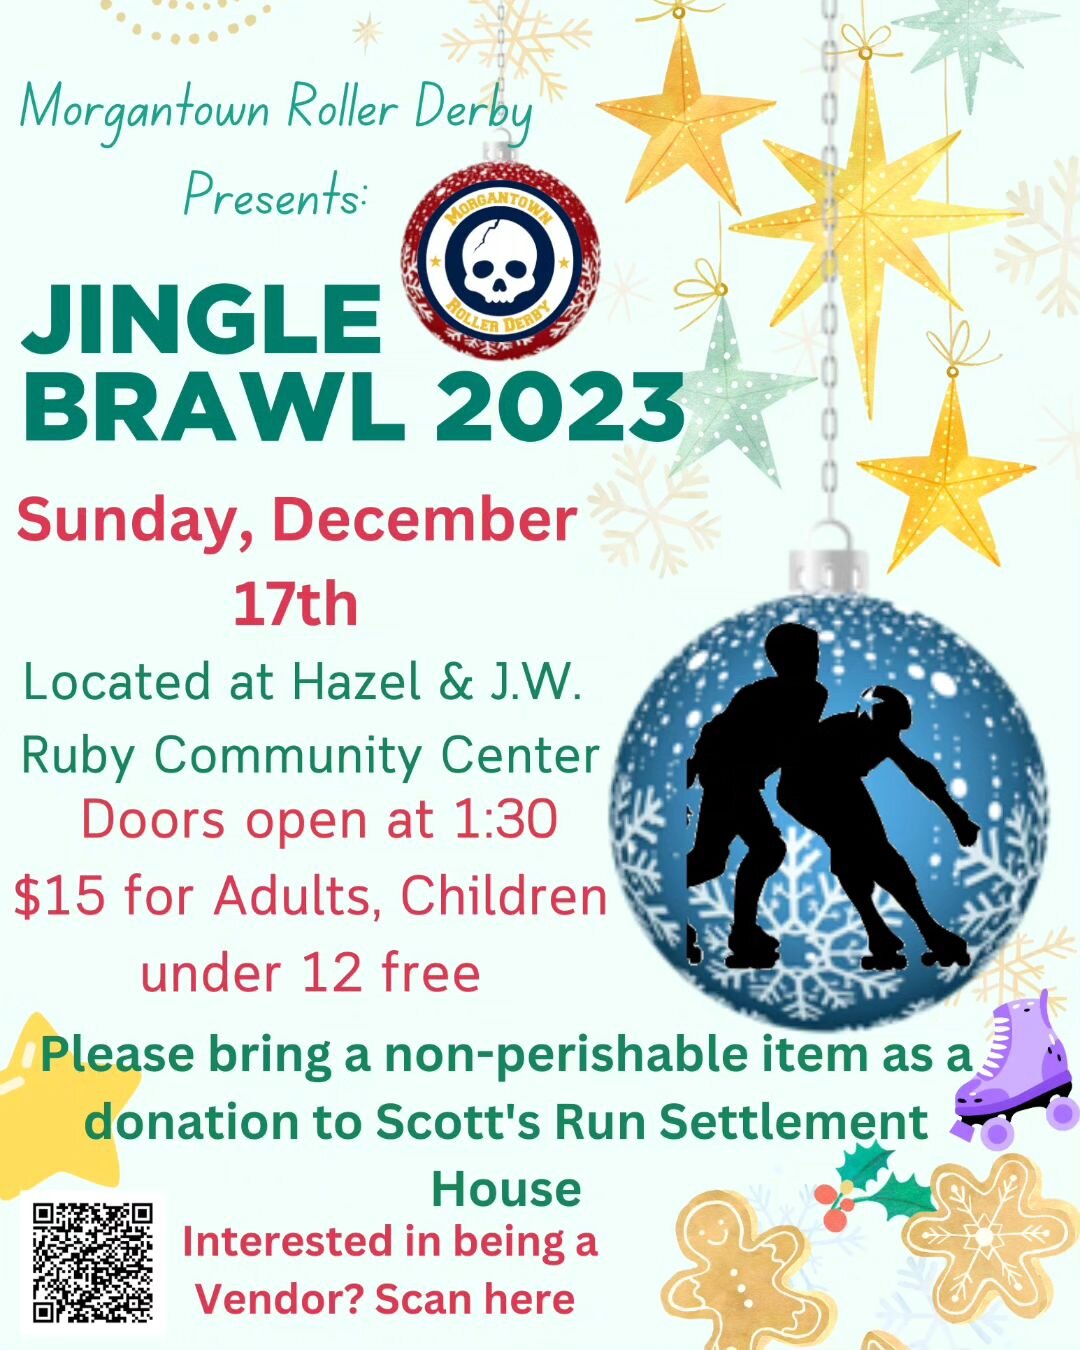 This weekend! Tell everyone! #jinglebrawl2023